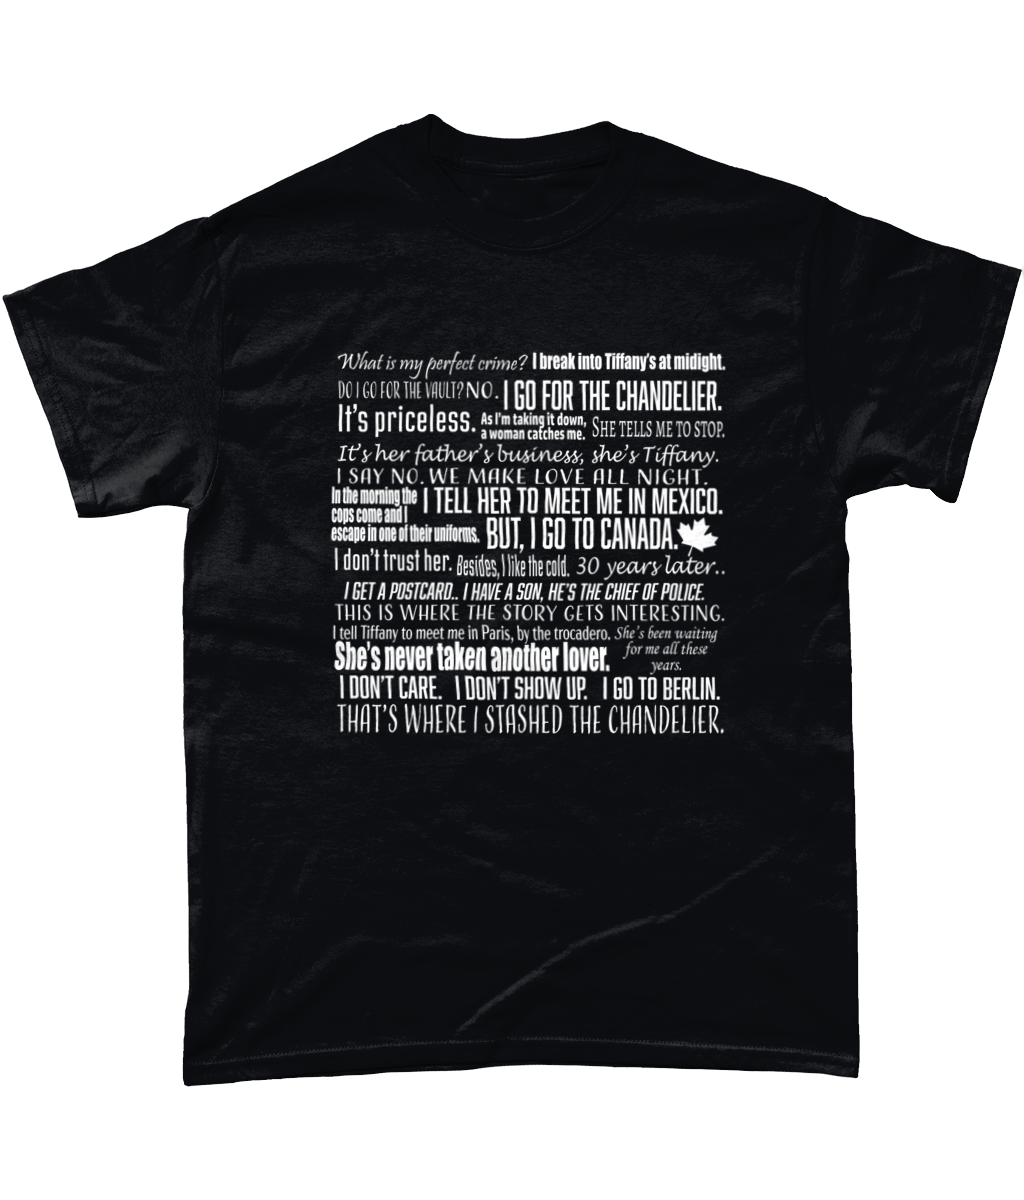 Dwight's Perfect Crime Original Design Unisex T-Shirt